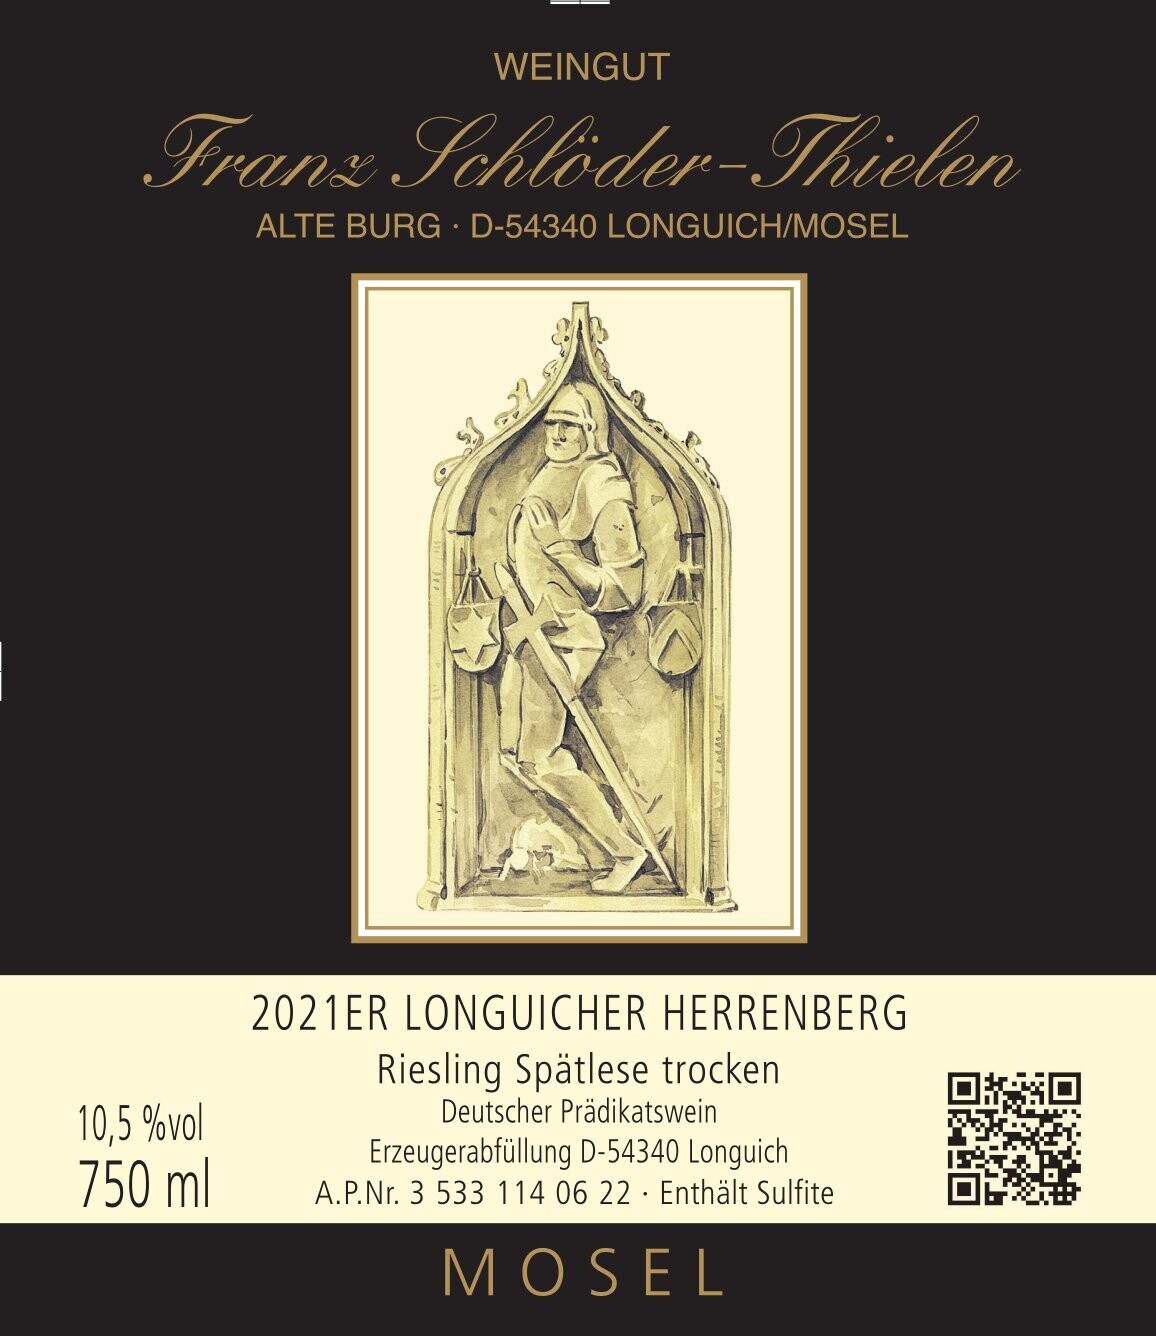 2021 Longuicher Herrenberg, Riesling Spätlese trocken, NOBLESSE